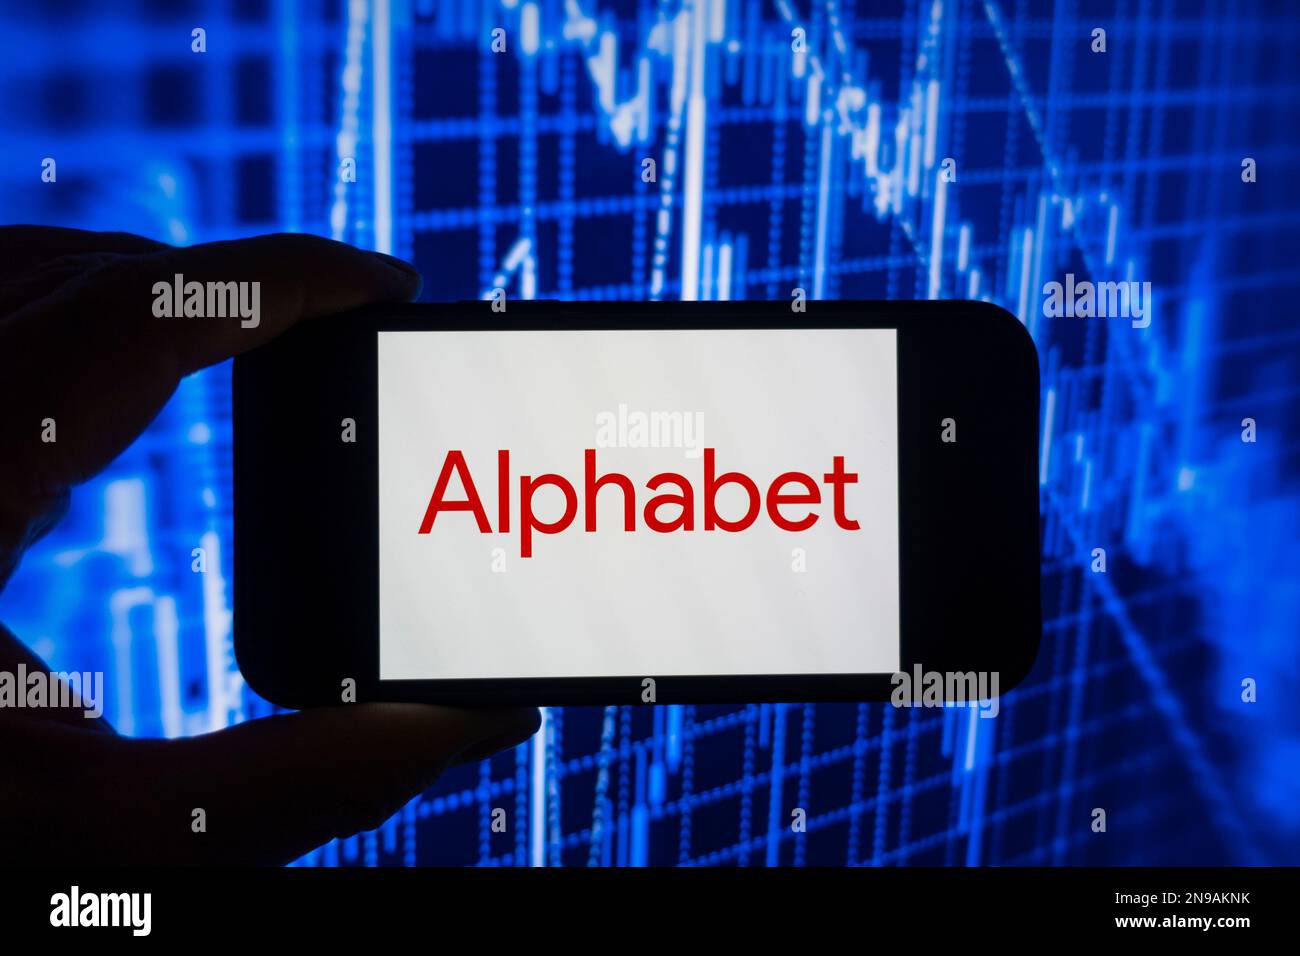 Digital composite image of Google Alphabet logo on phone scree. Stock Photo